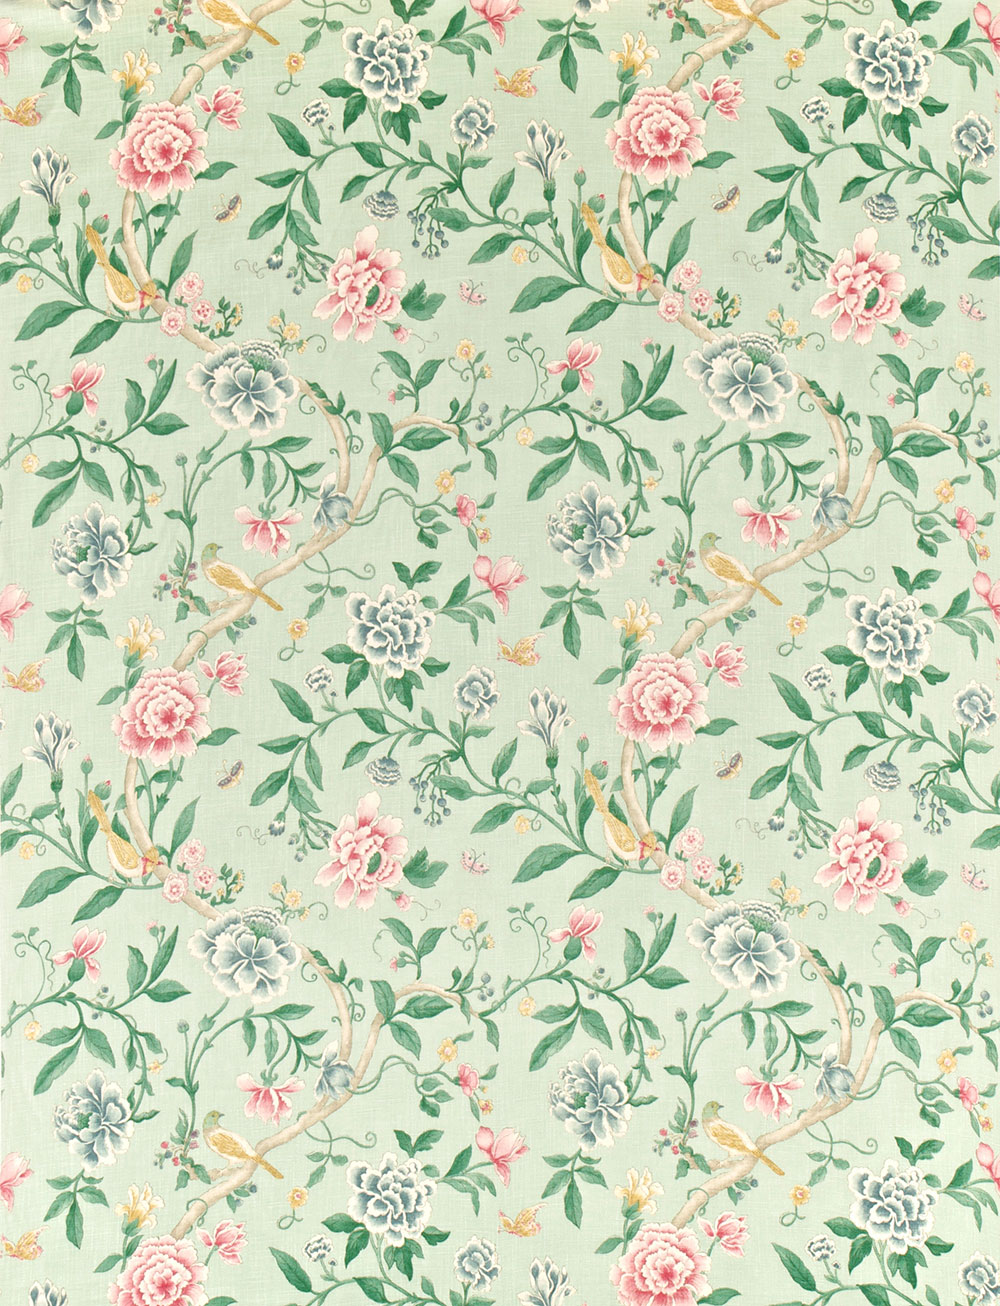 Porcelain Garden Fabric - Rose/Duck egg - by Sanderson